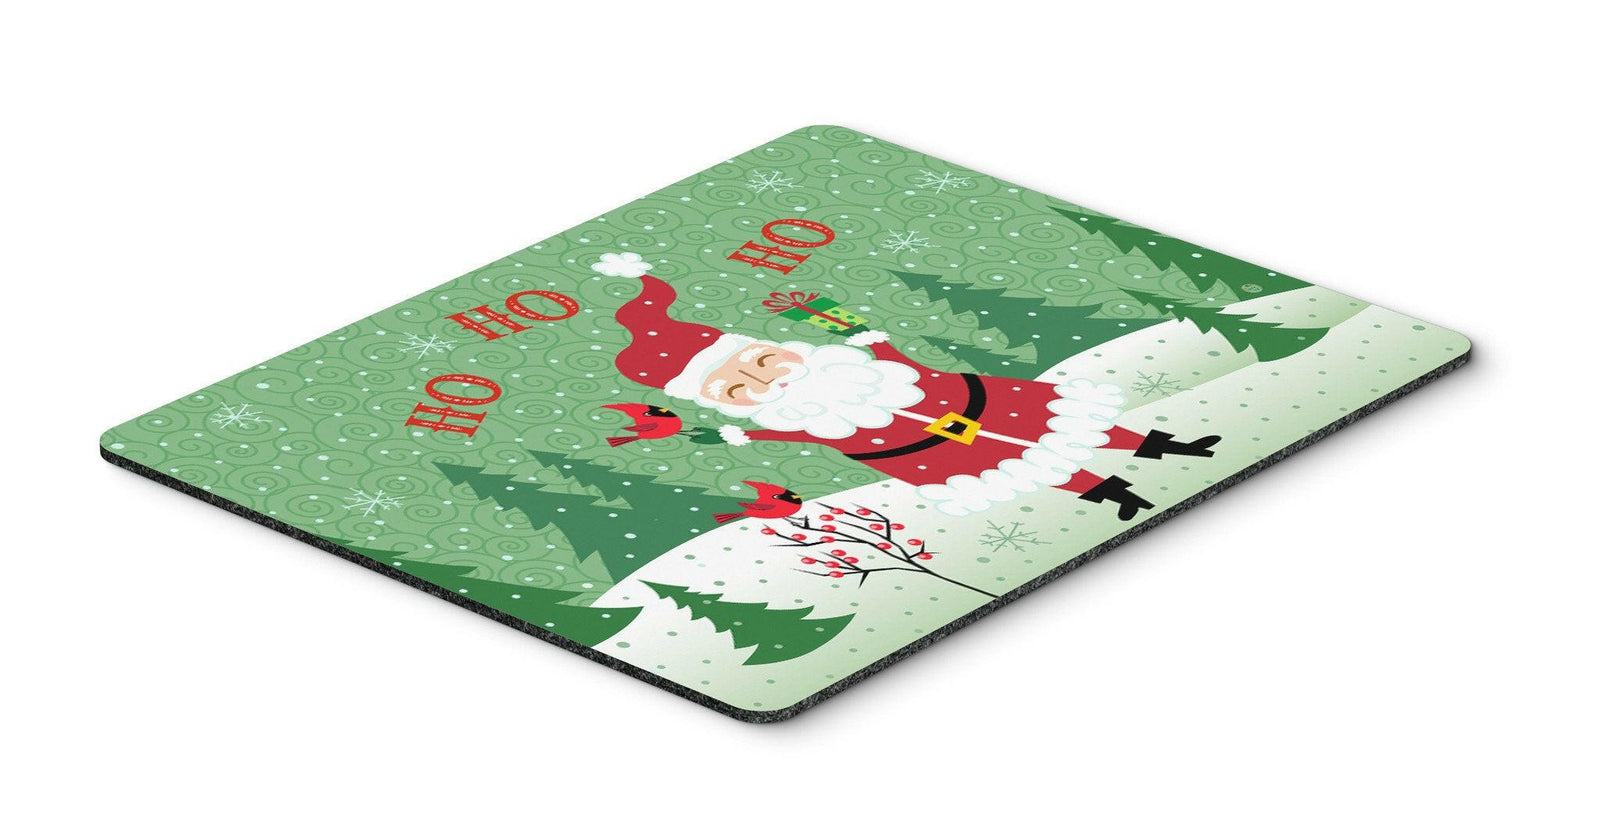 Merry Christmas Santa Claus Ho Ho Ho Mouse Pad, Hot Pad or Trivet VHA3016MP by Caroline's Treasures